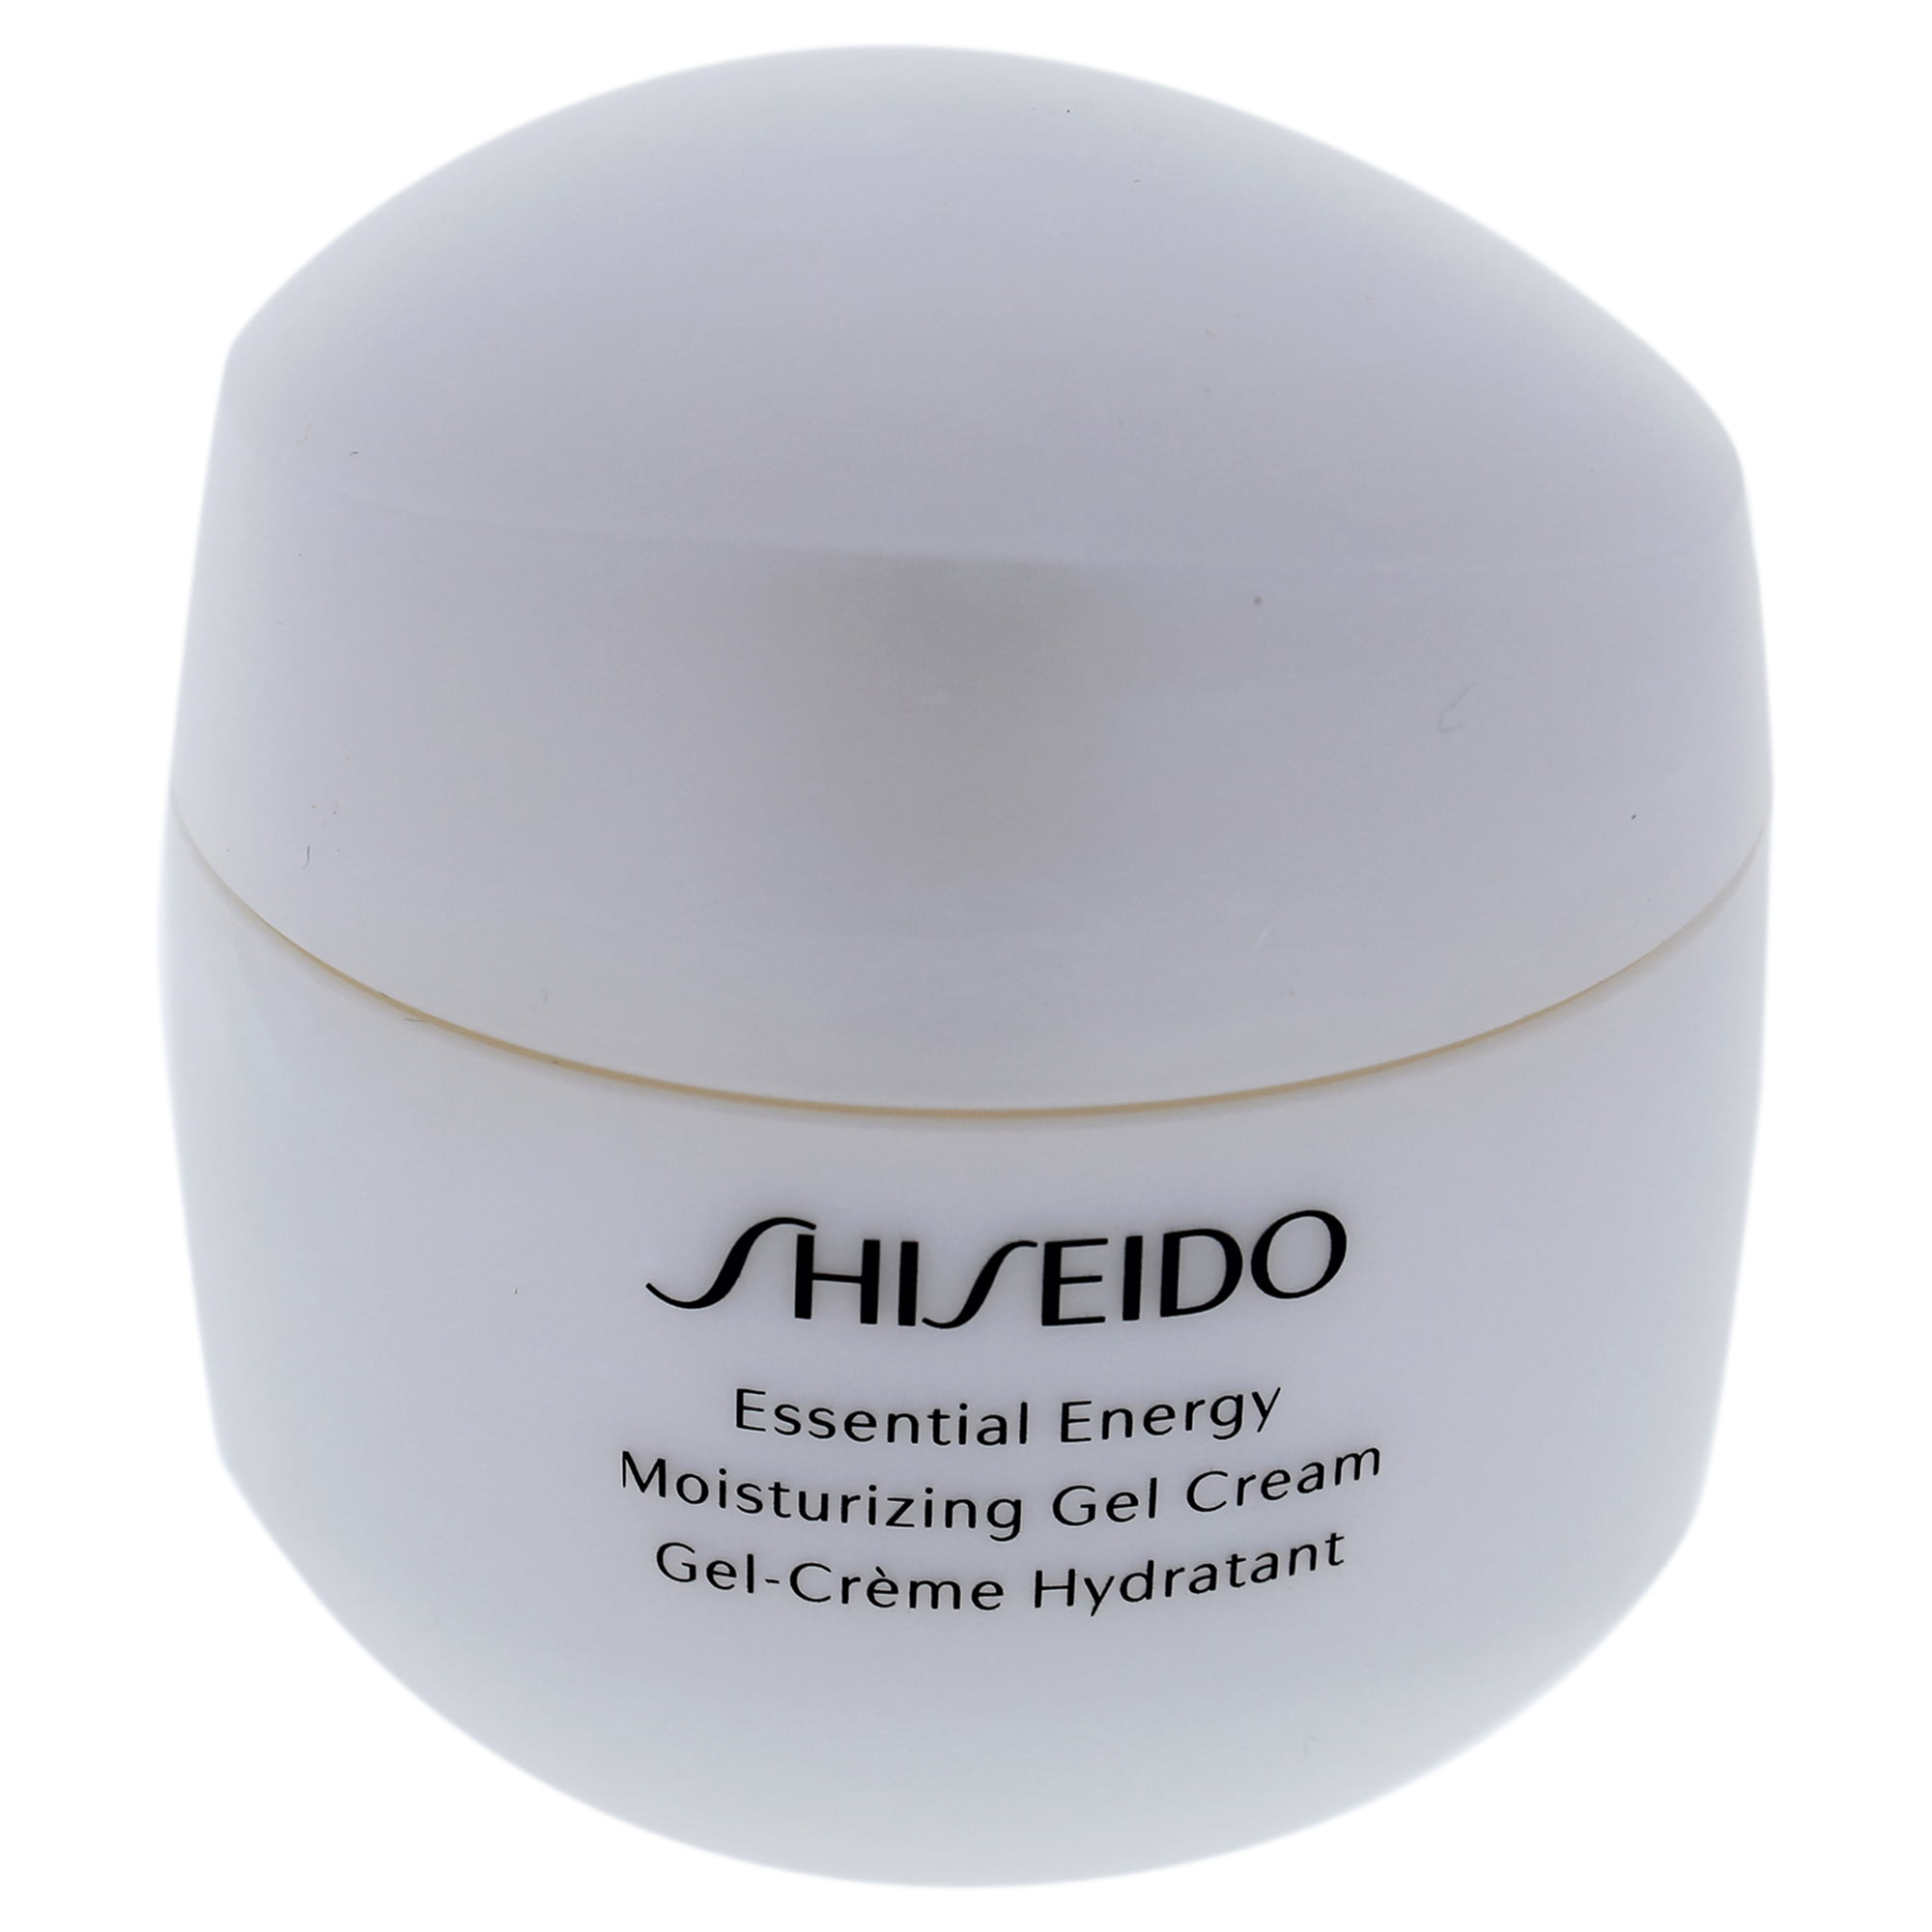 Easo Shiseido крем ультра. Shiseido крем для умывания. Shiseido essential energy